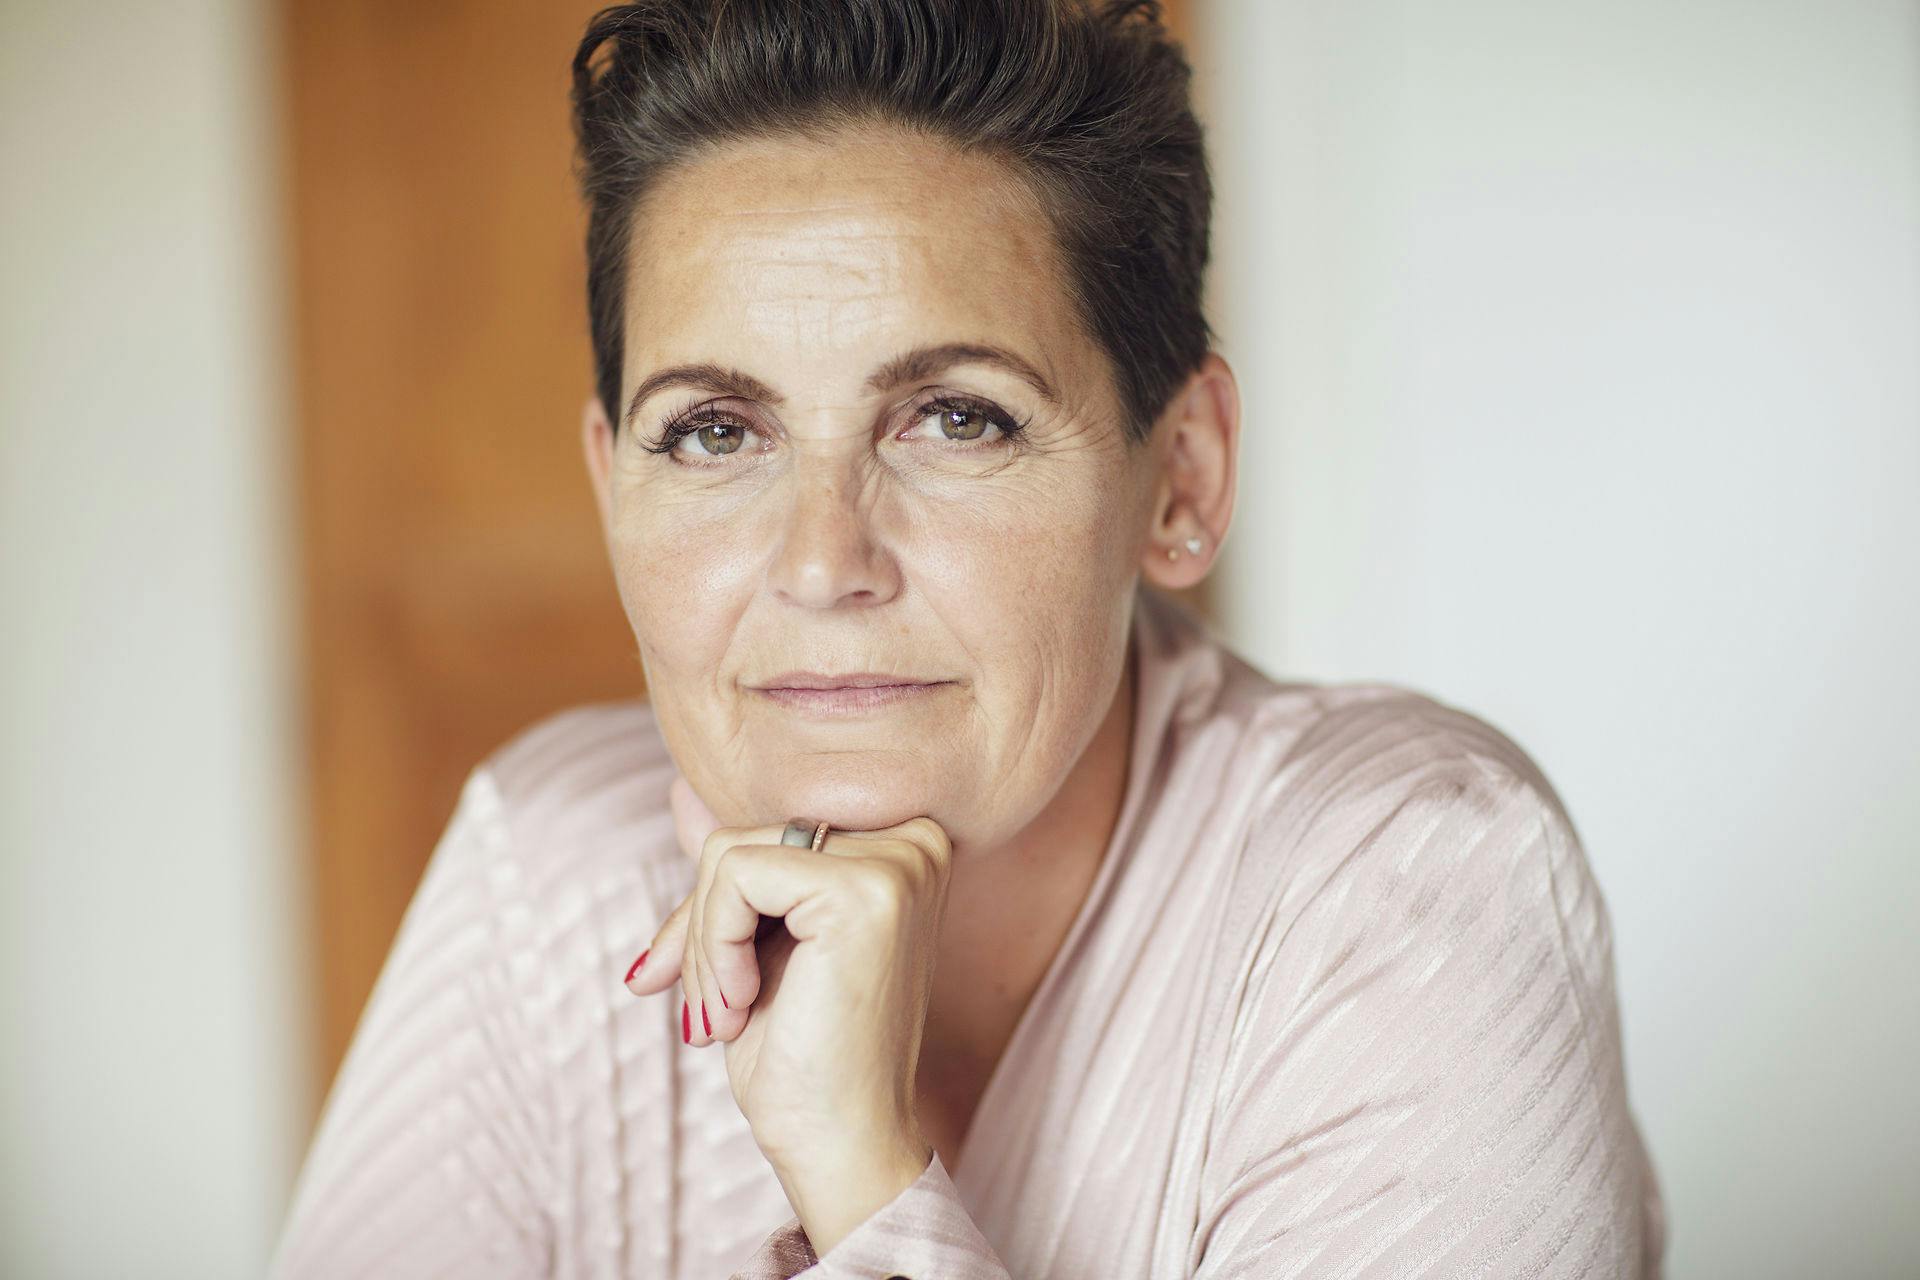 Pia Olsen Dyhr, 50, taler ud om sin barske barndom i bogen "Jeg er fra Vestegnen".